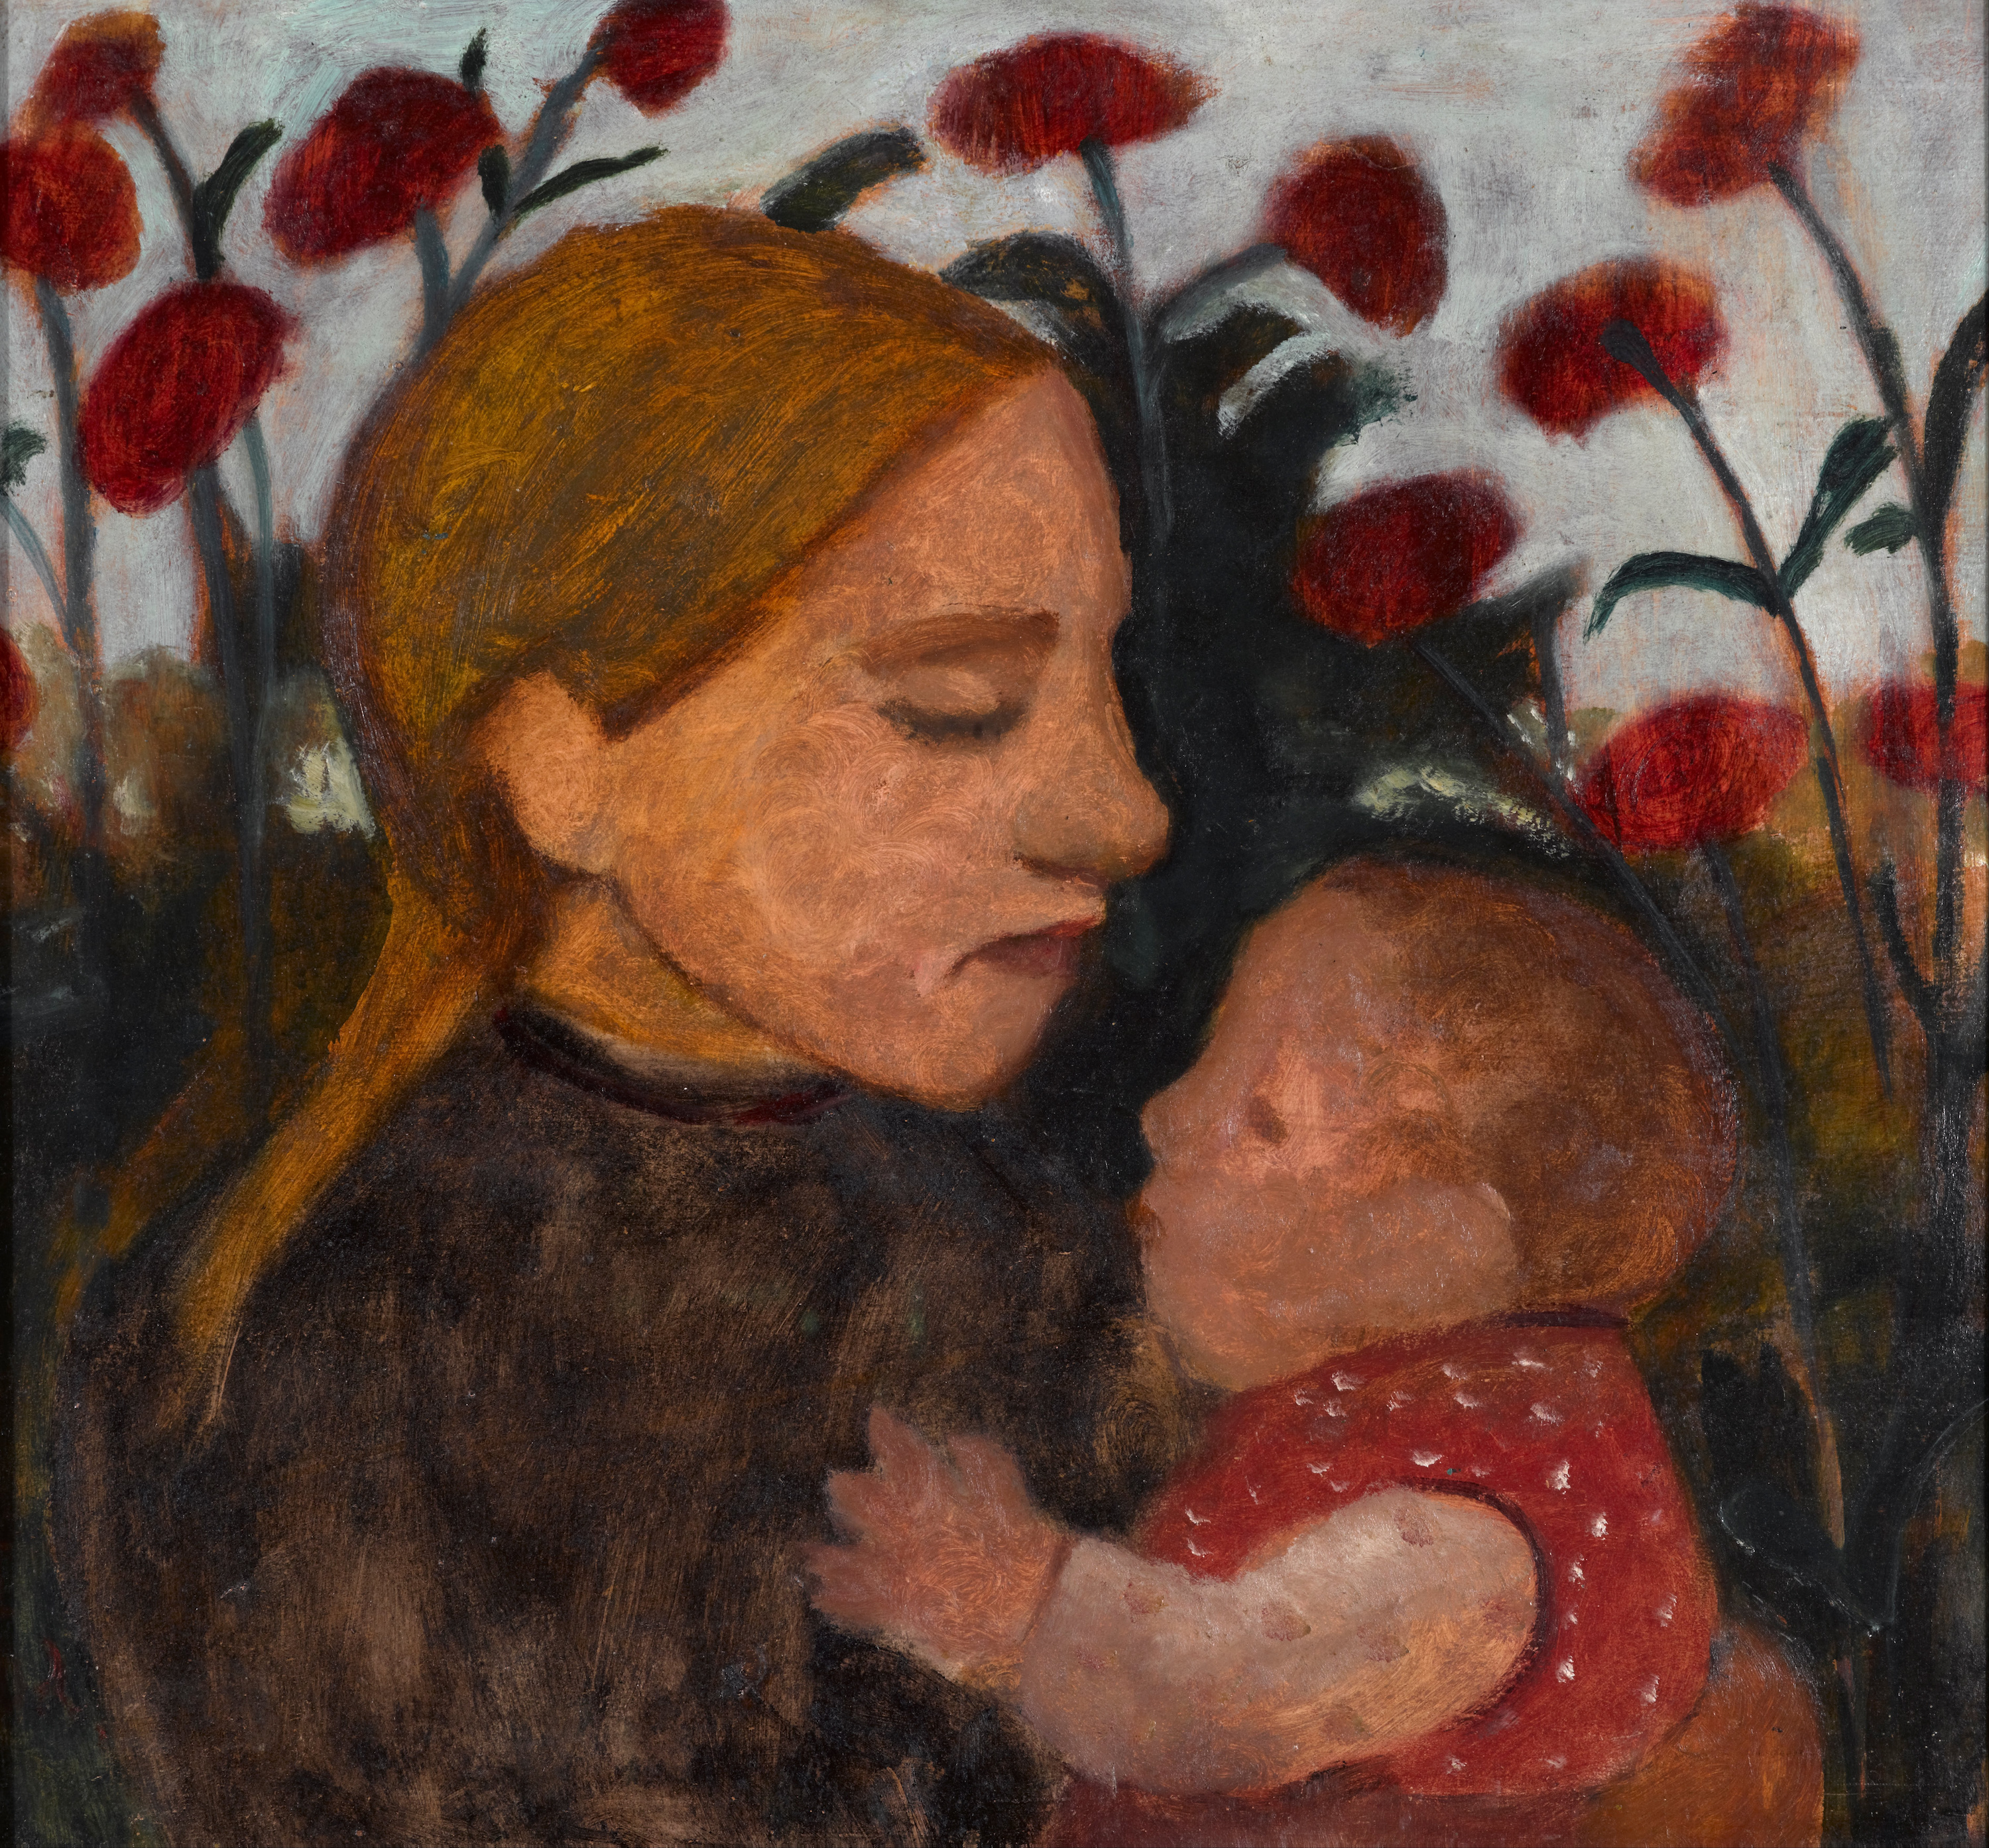 Fată cu copil by Paula Modersohn-Becker - 1902 - 71 x 66.3 cm 